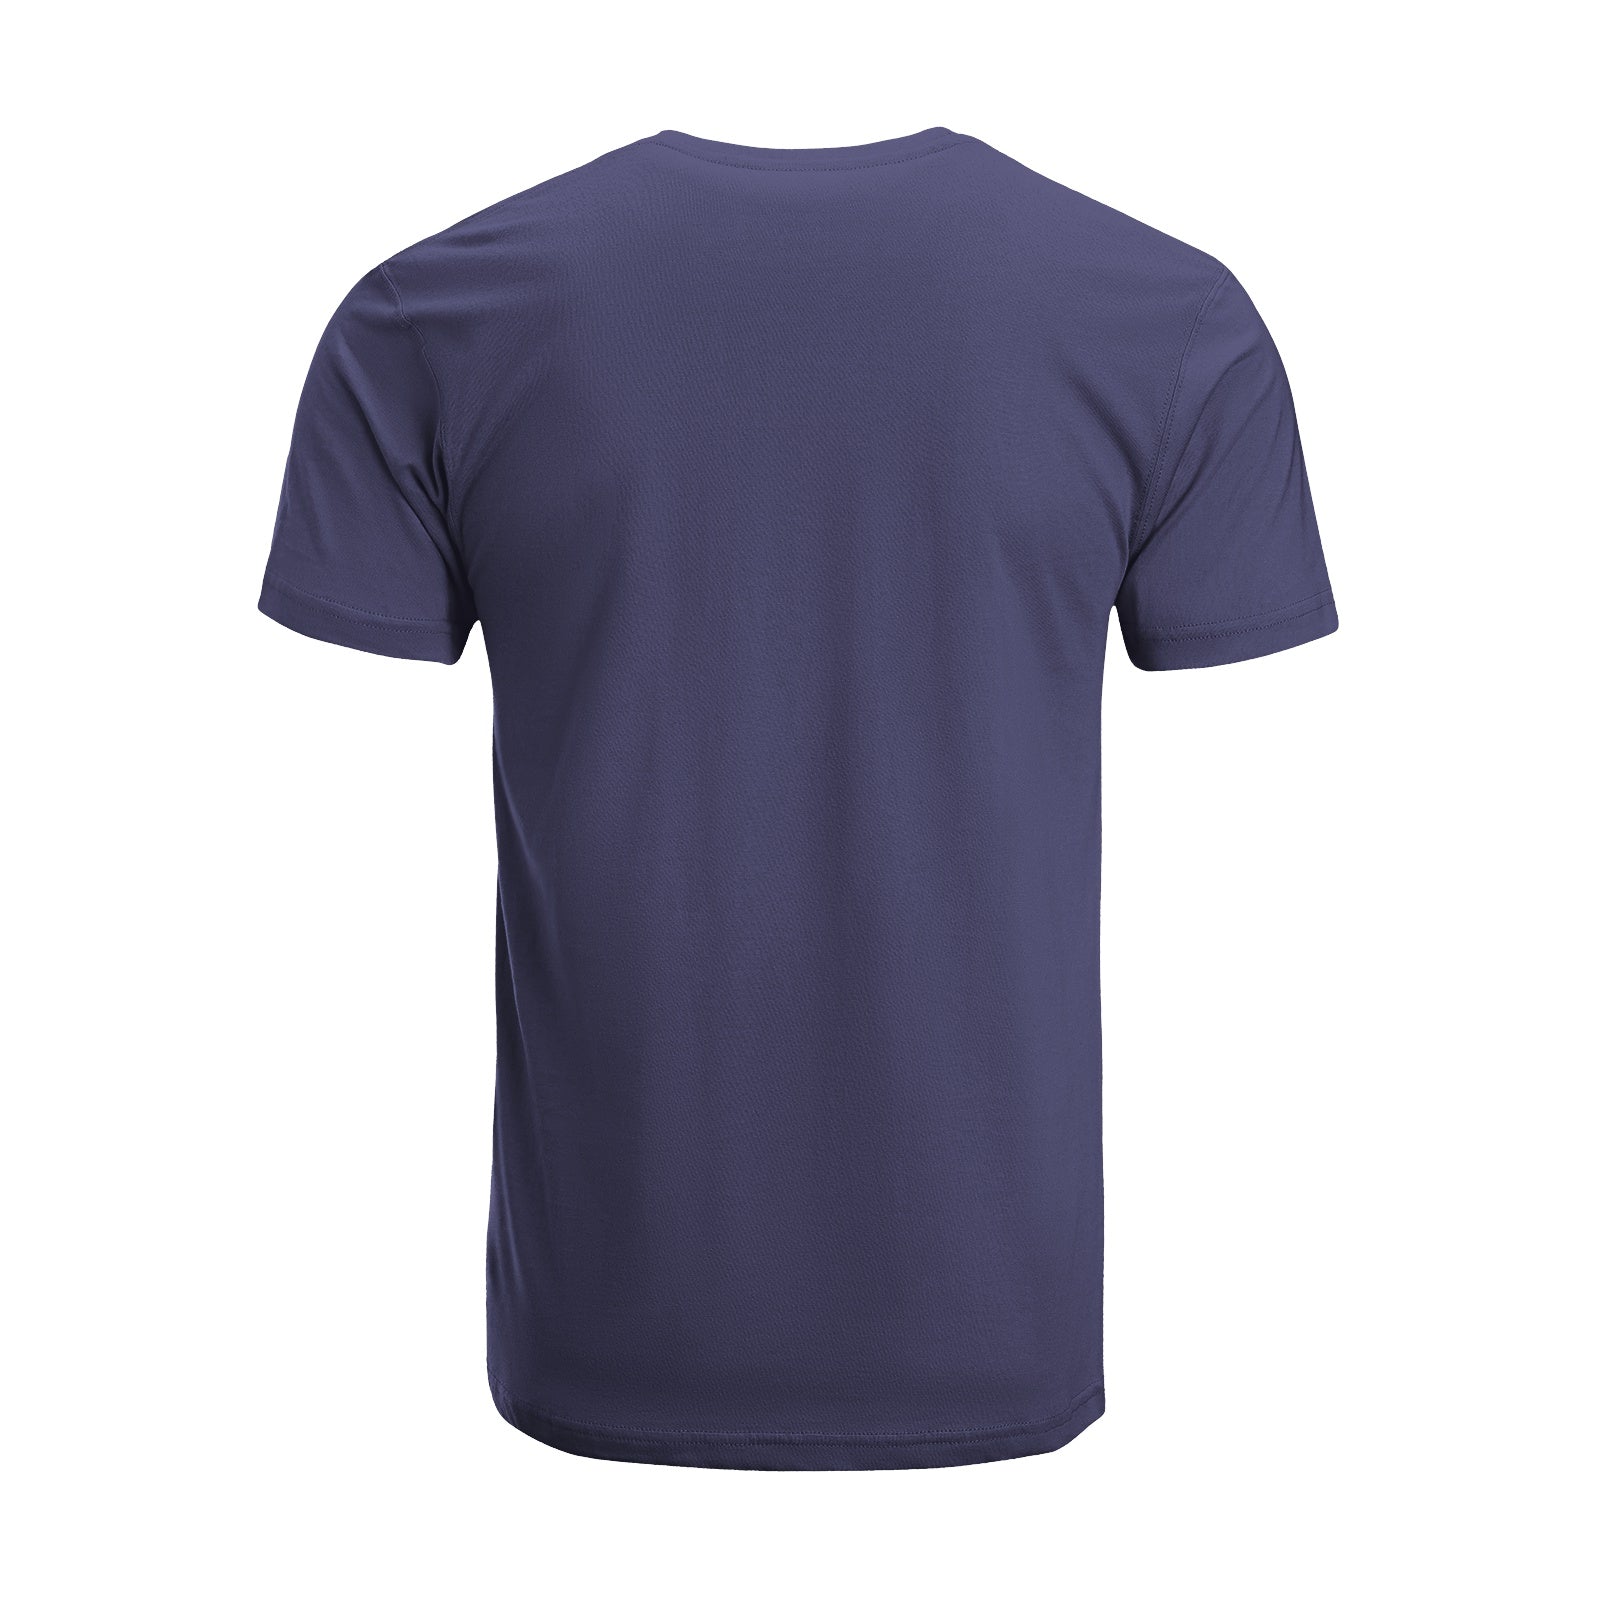 Unisex Short Sleeve Crew Neck Cotton Jersey T-Shirt CAT 16 - Tara-Outfits.com